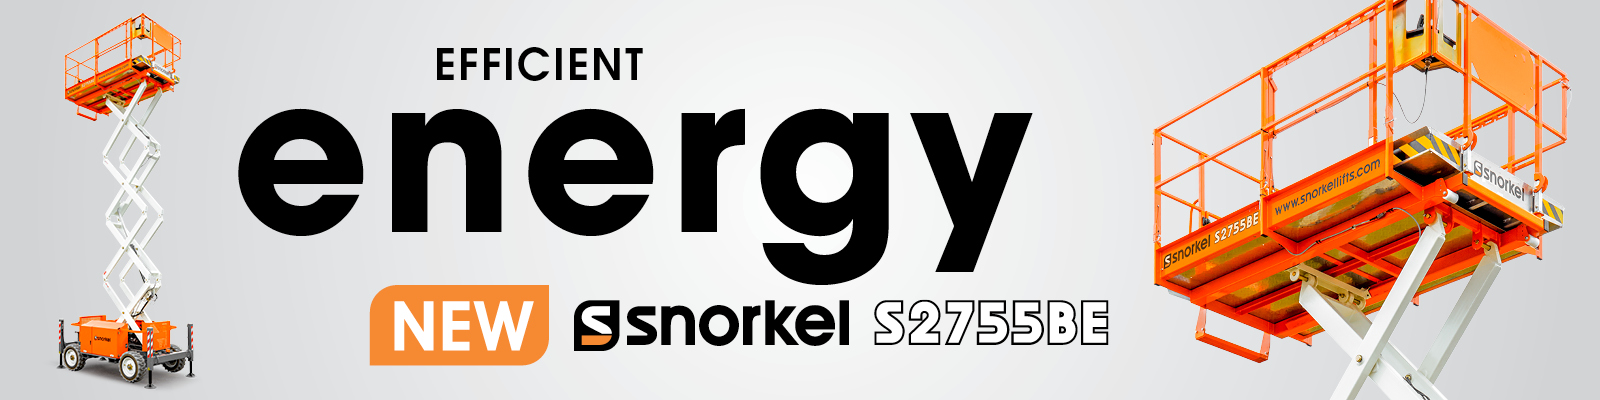 Efficient Energy Snorkel S2755BE bi-energy rough terrain scissor lift